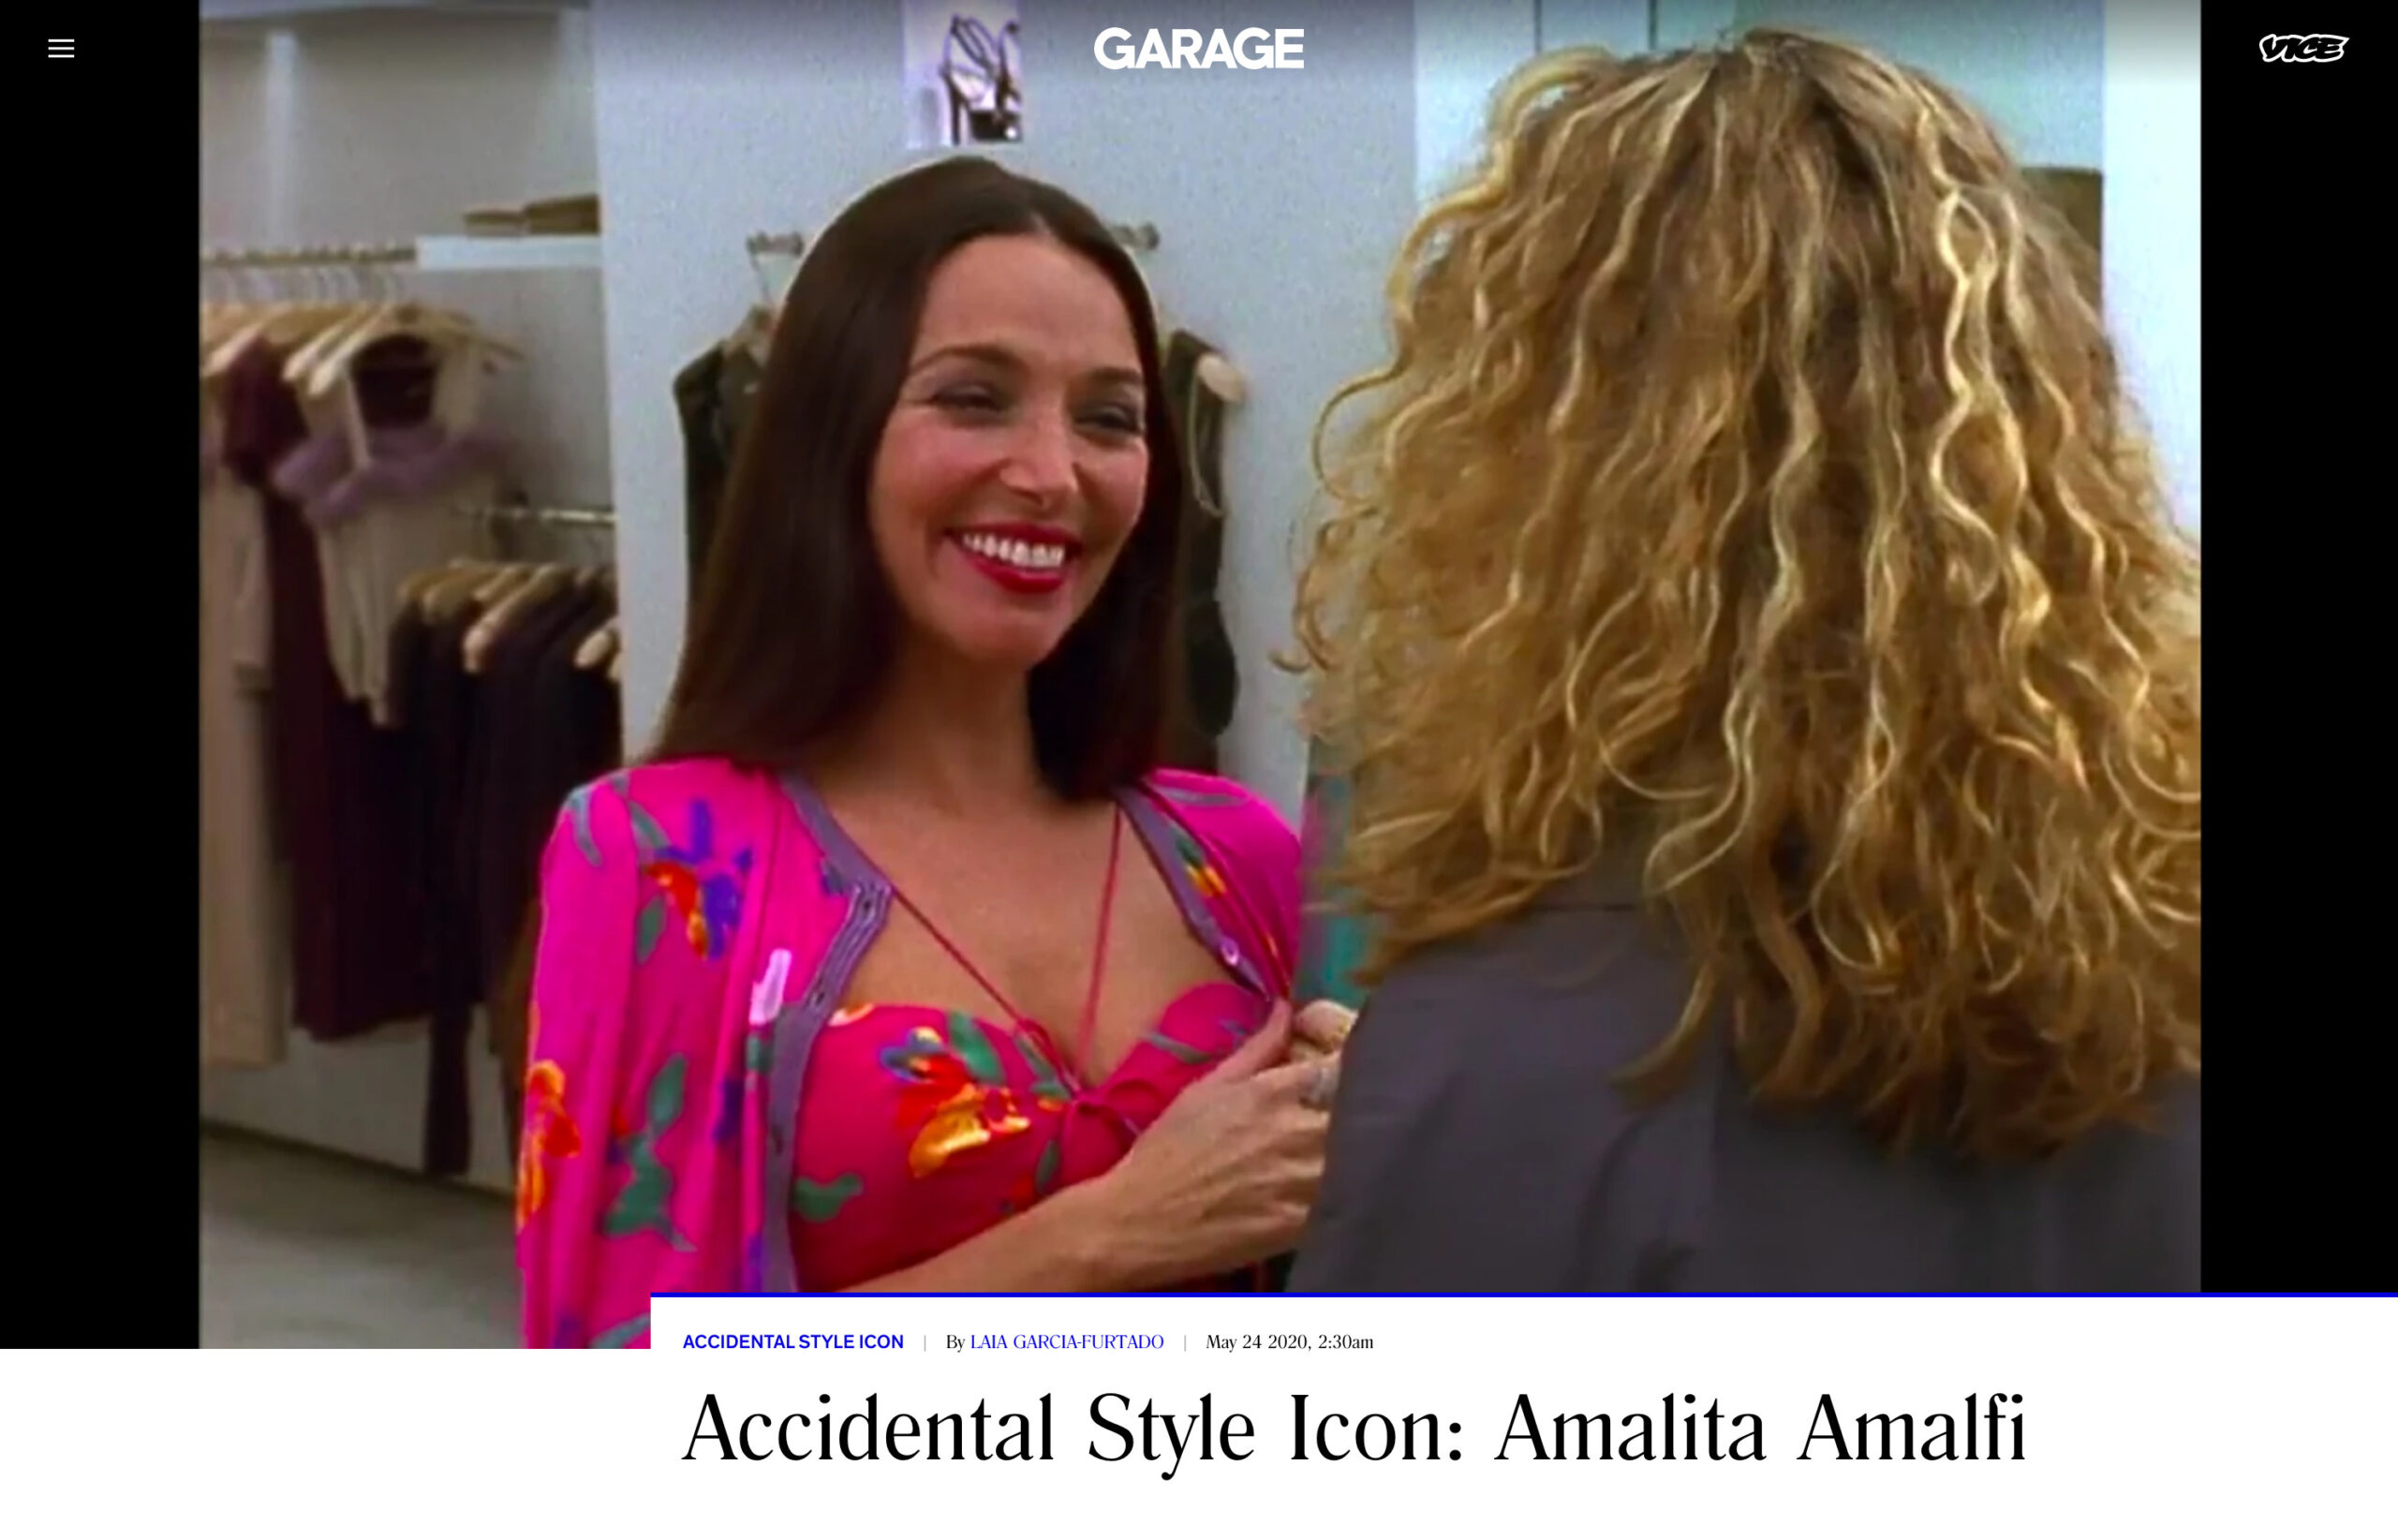 Carole Davis - Garage Magazine VICE Accidental Style Icon: Amalita Amalfi